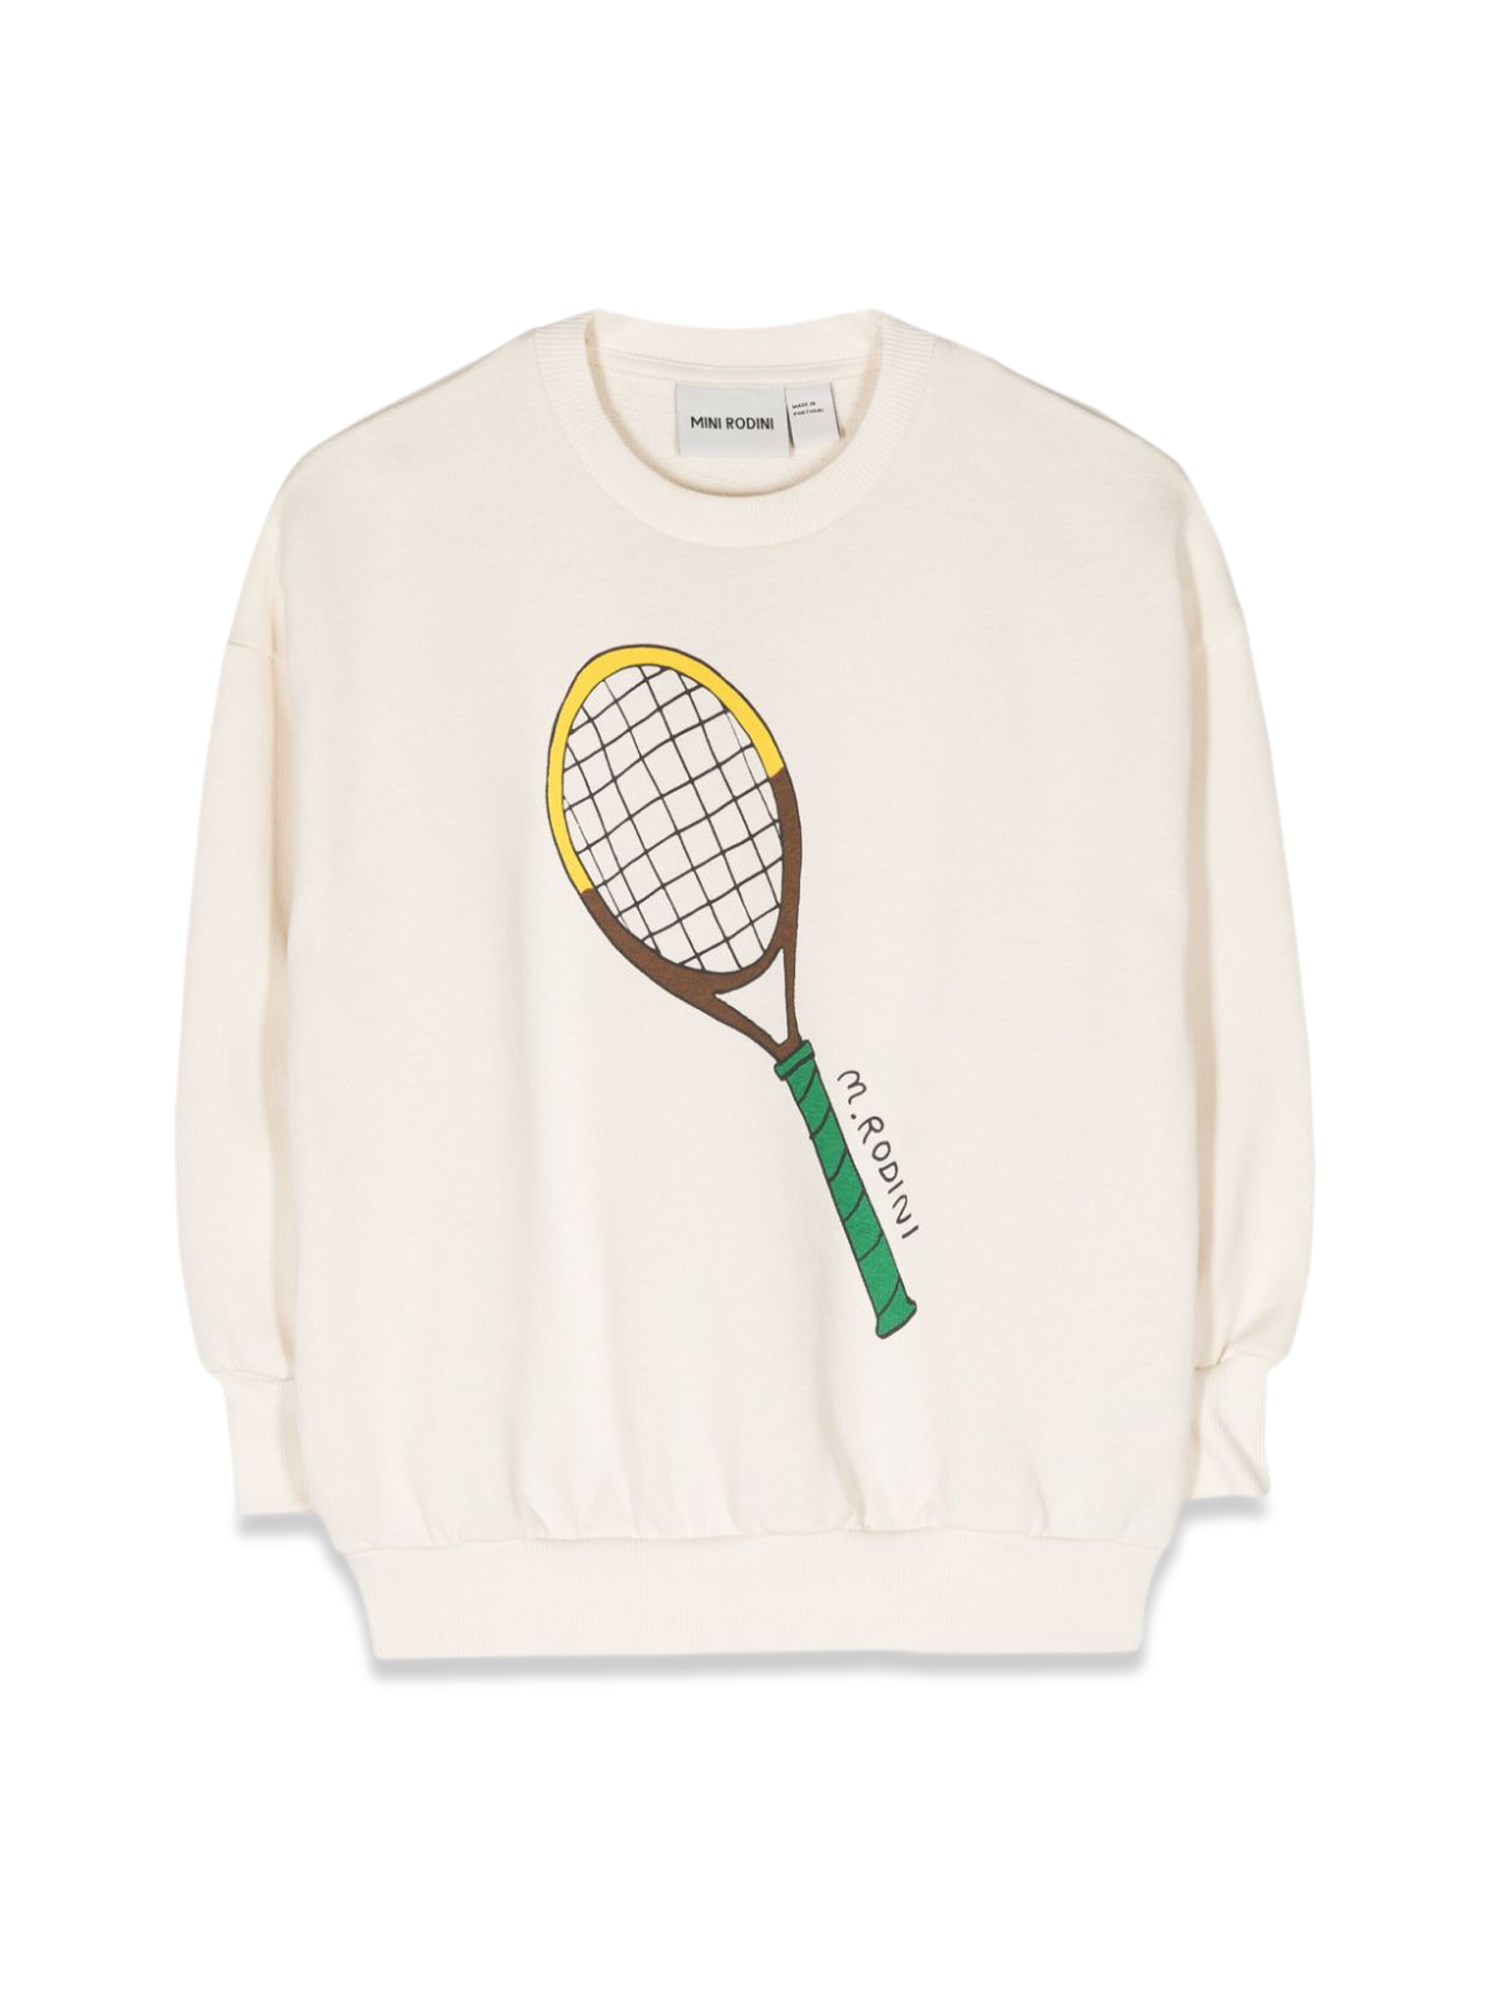 mini rodini tennis sp sweatshirt - chapter 2